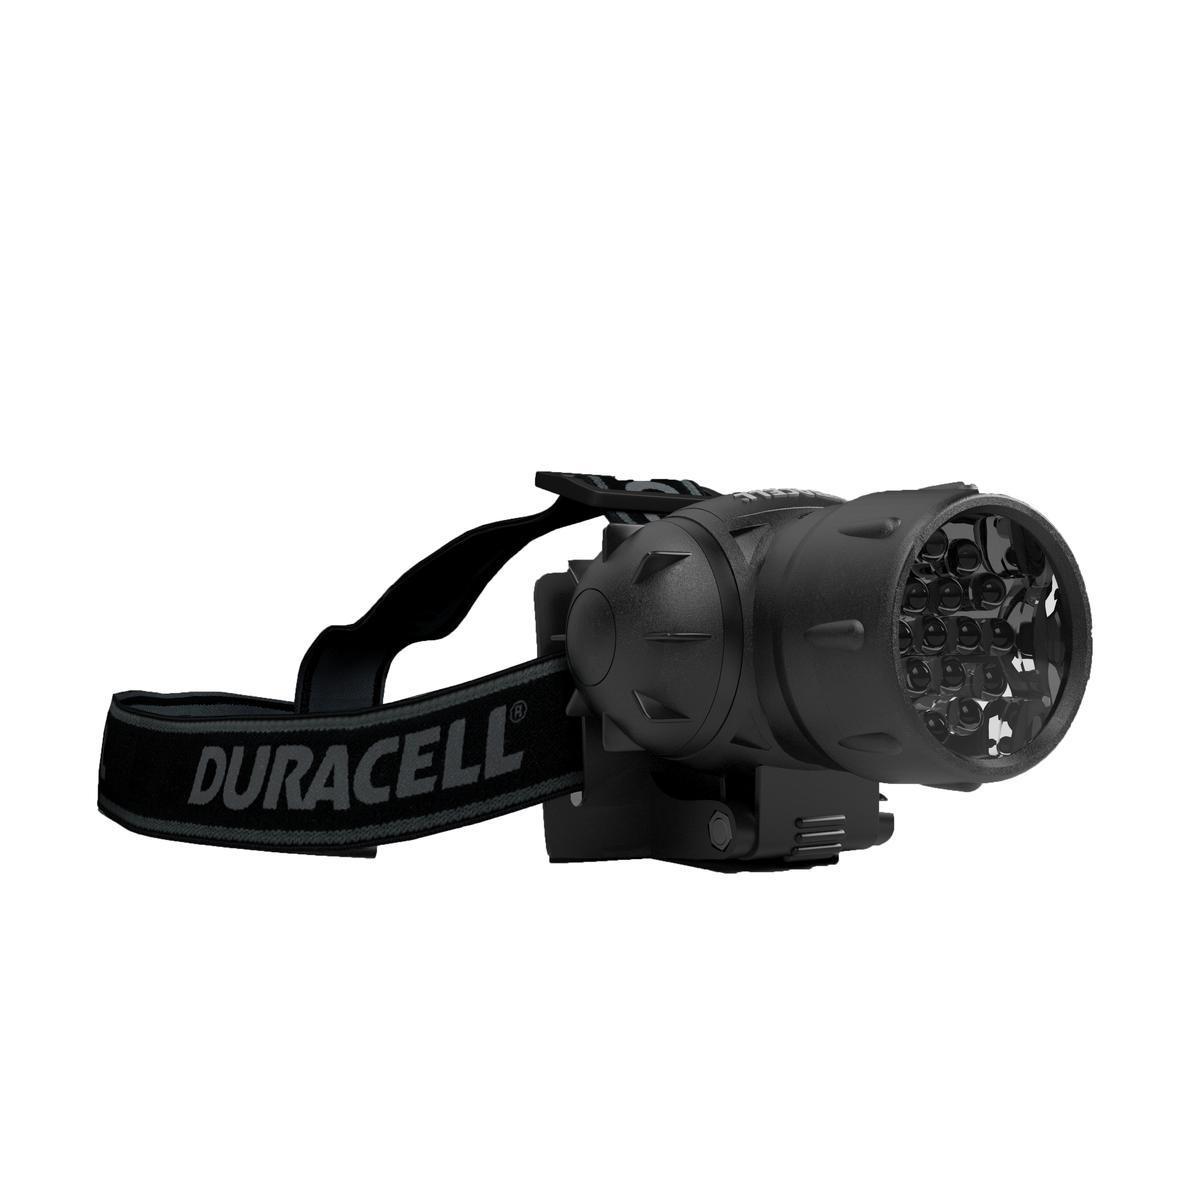 Lampe frontale Duracell - 19,5 x 14,5 x 5,8 cm - gris